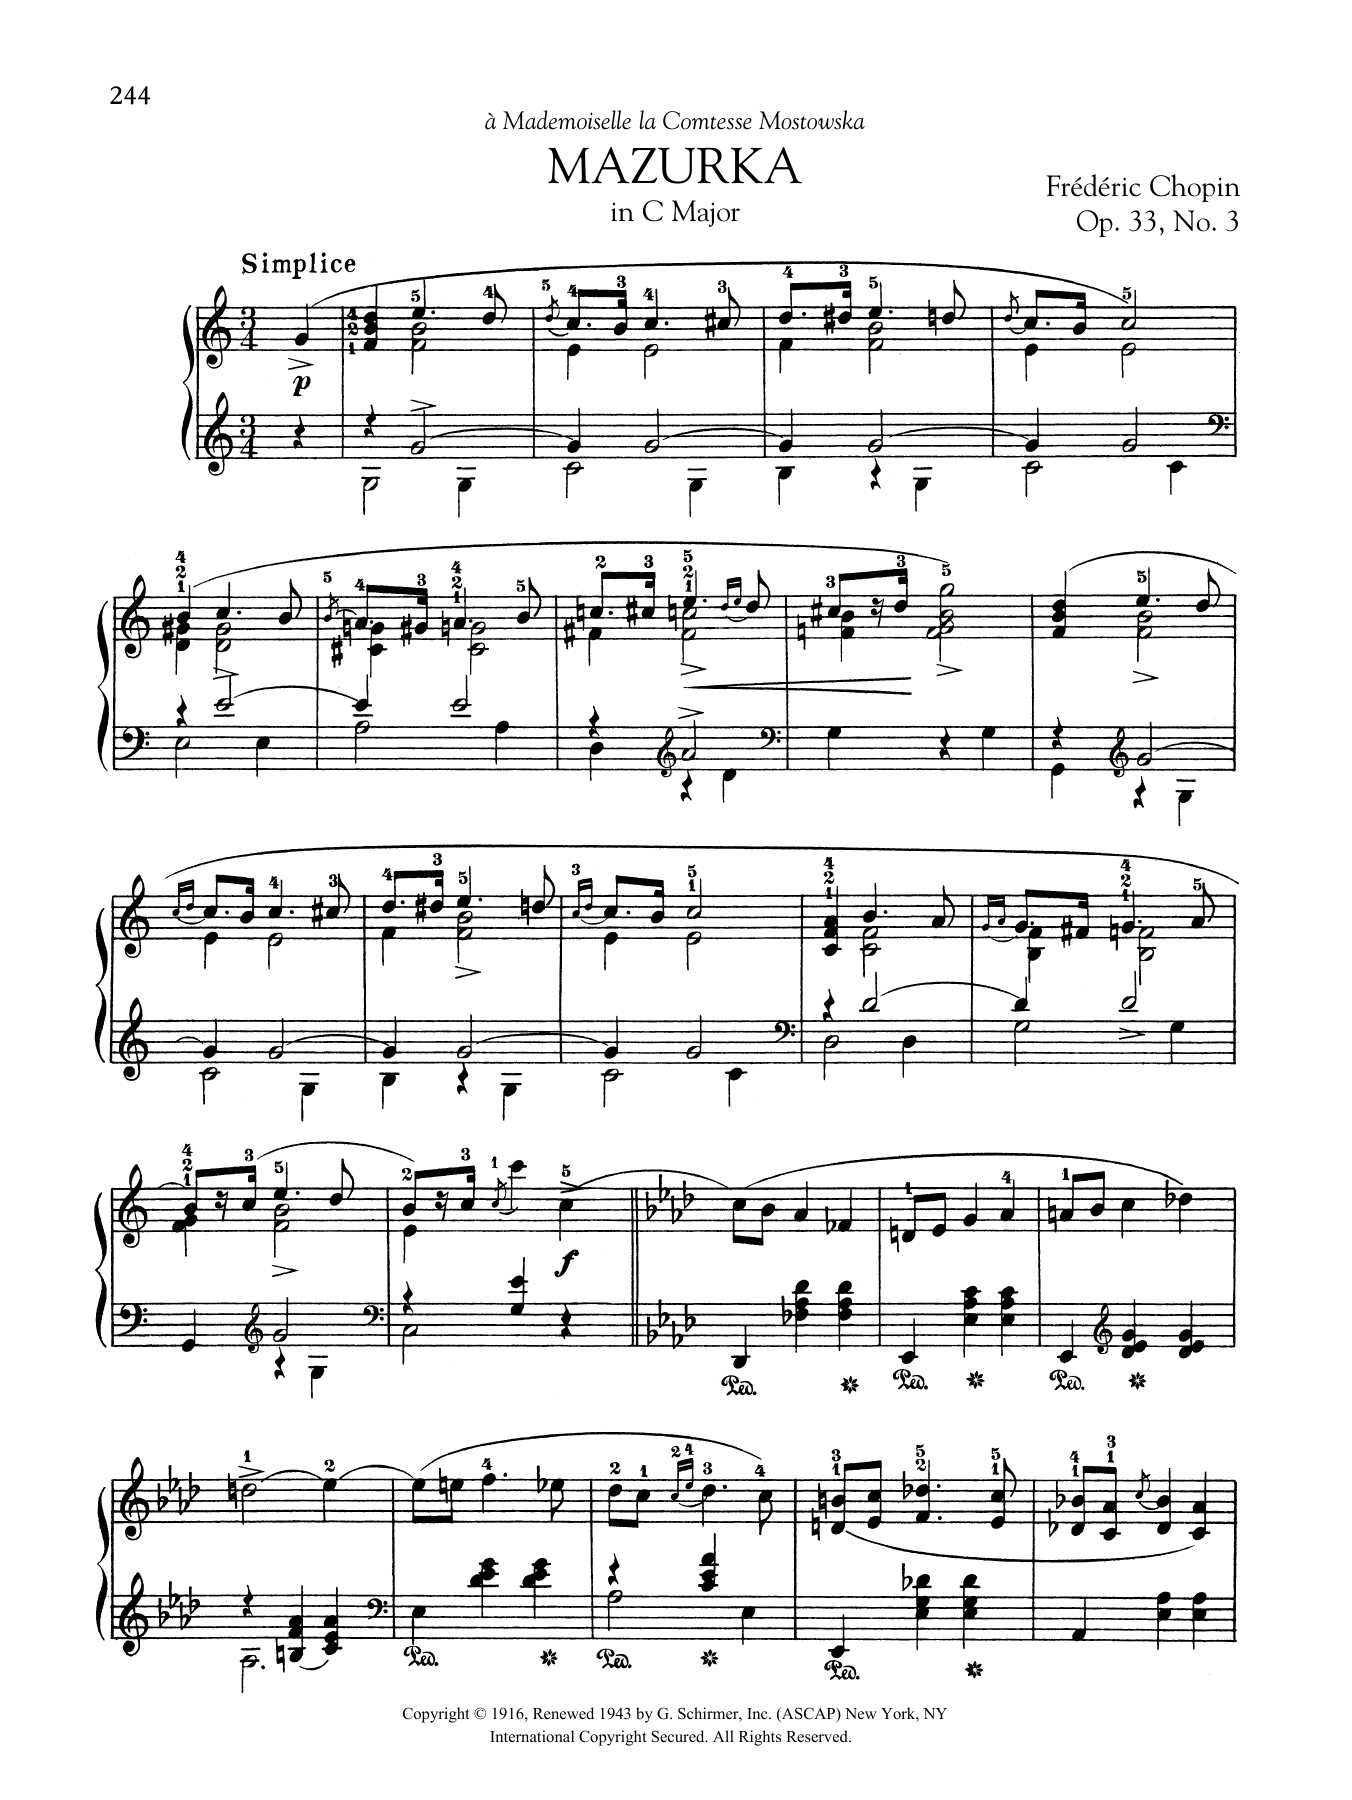 Download Frederic Chopin Mazurka in C Major, Op. 33, No. 3 Sheet Music